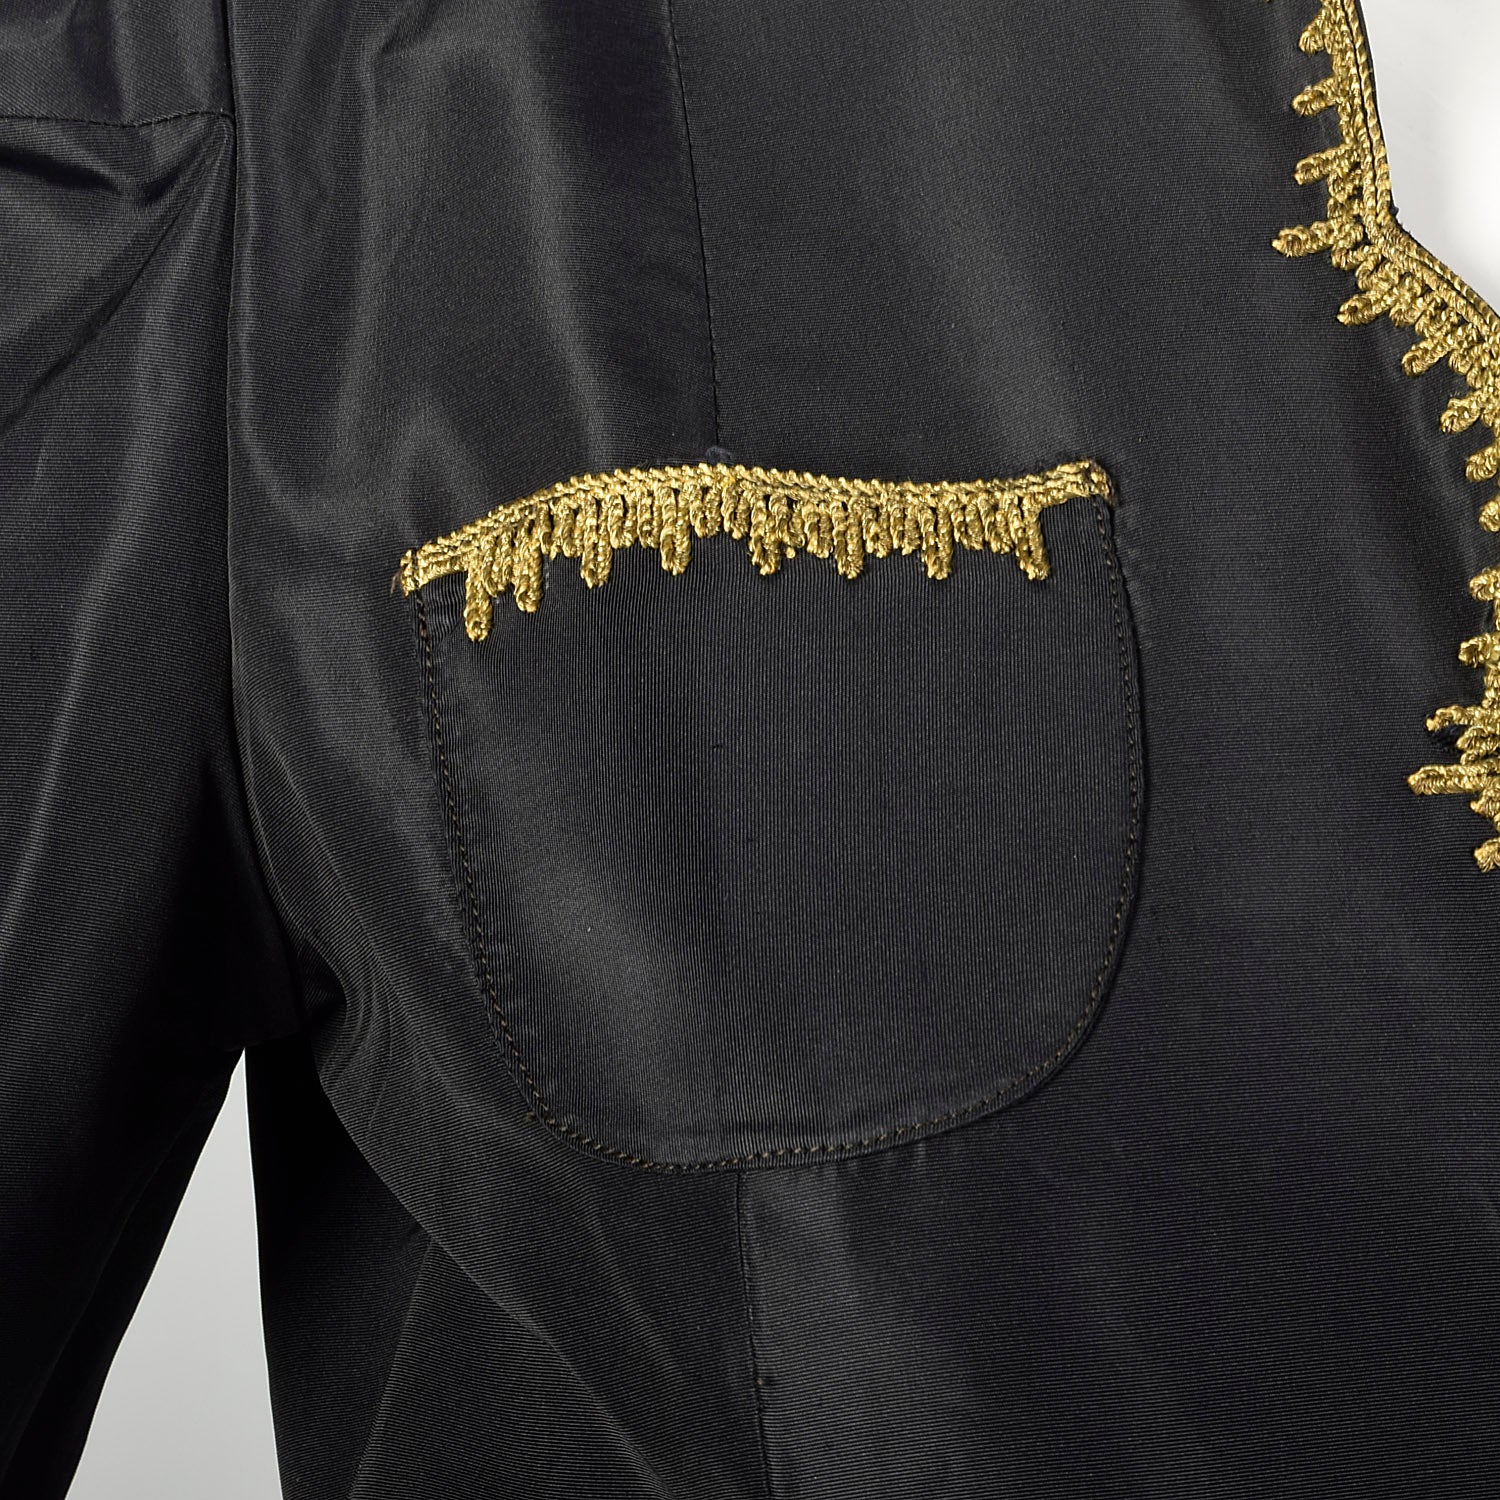 XS 1940s Jacket Black Taffeta Tie Waist Scallop Edge Gold Trim Embroidery Evening Jacket